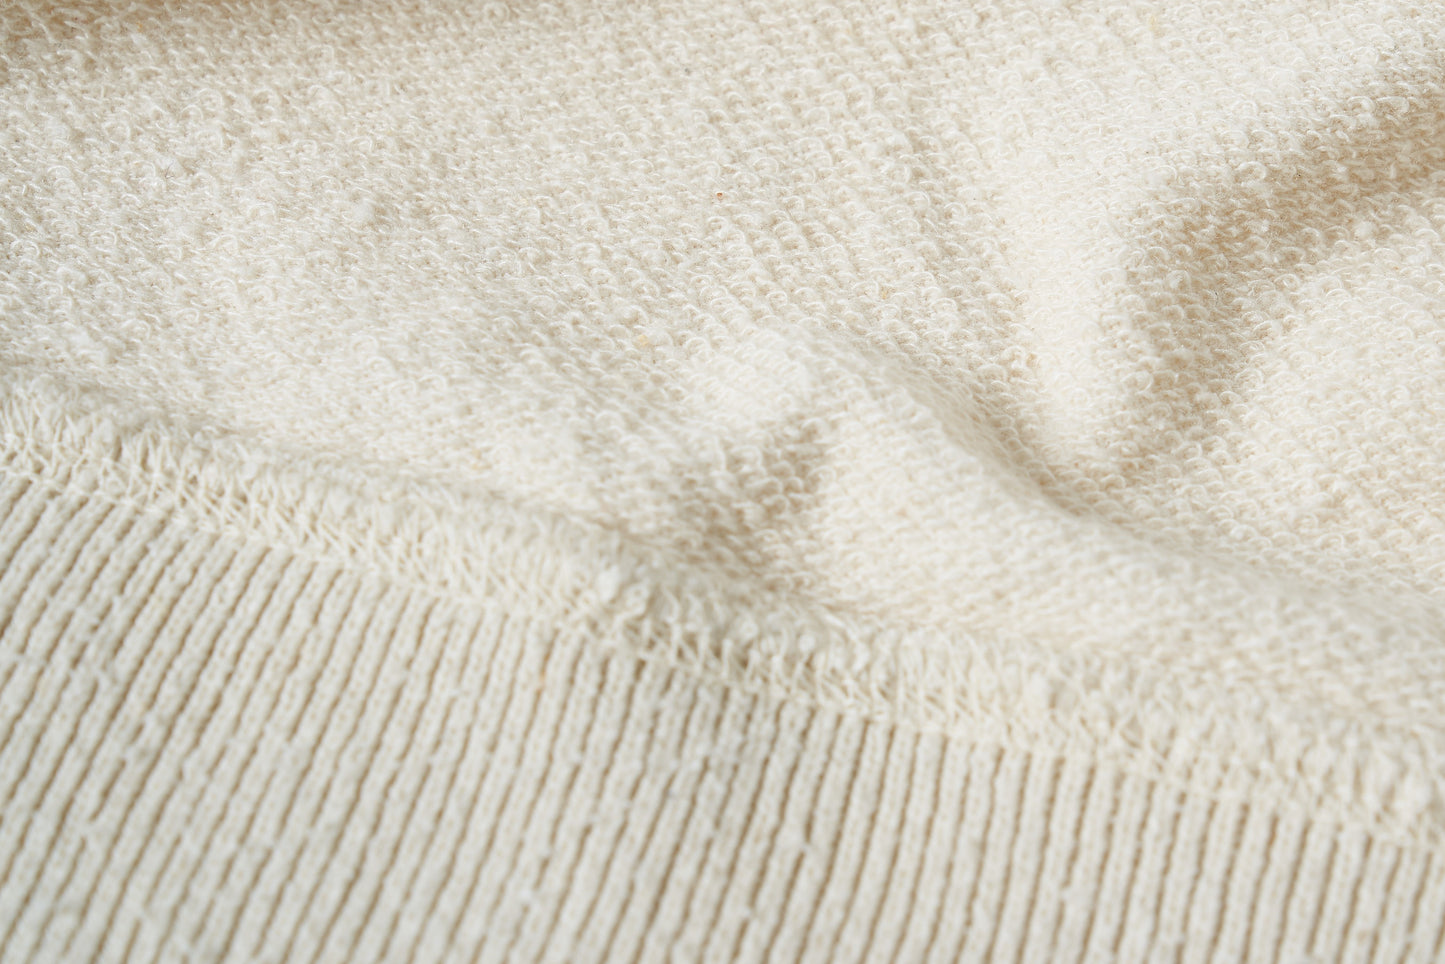 Raw silk fleece compact sweatshirt